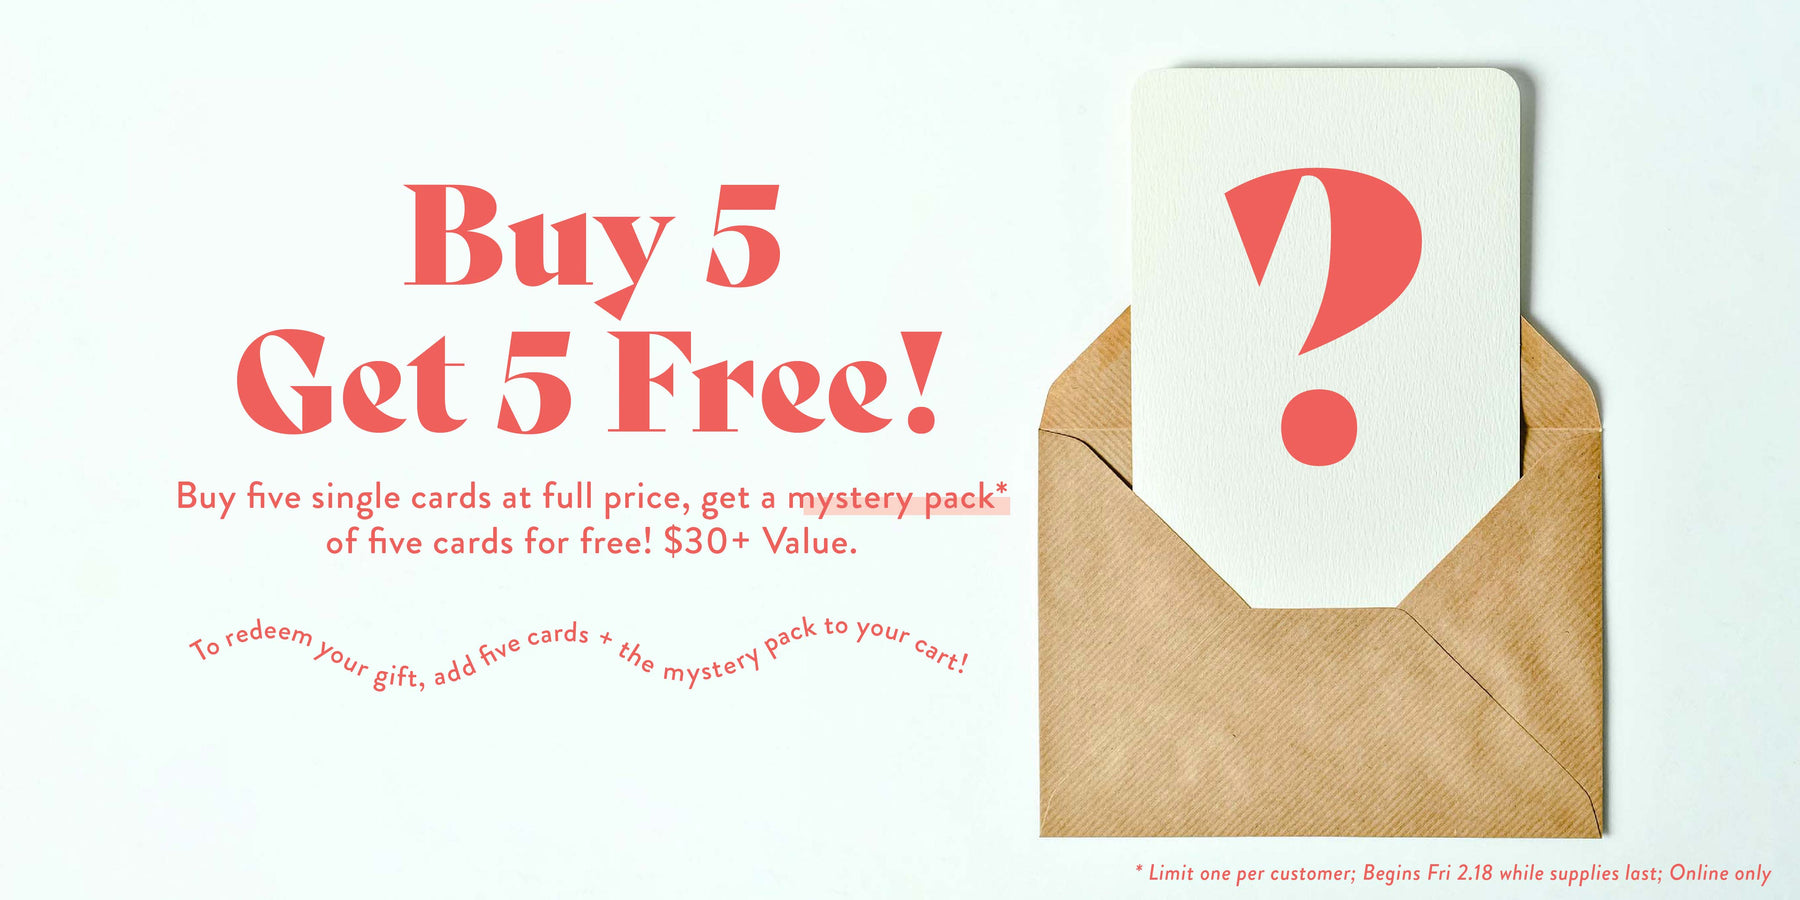 Buy 5 Cards Get 5 FREE!